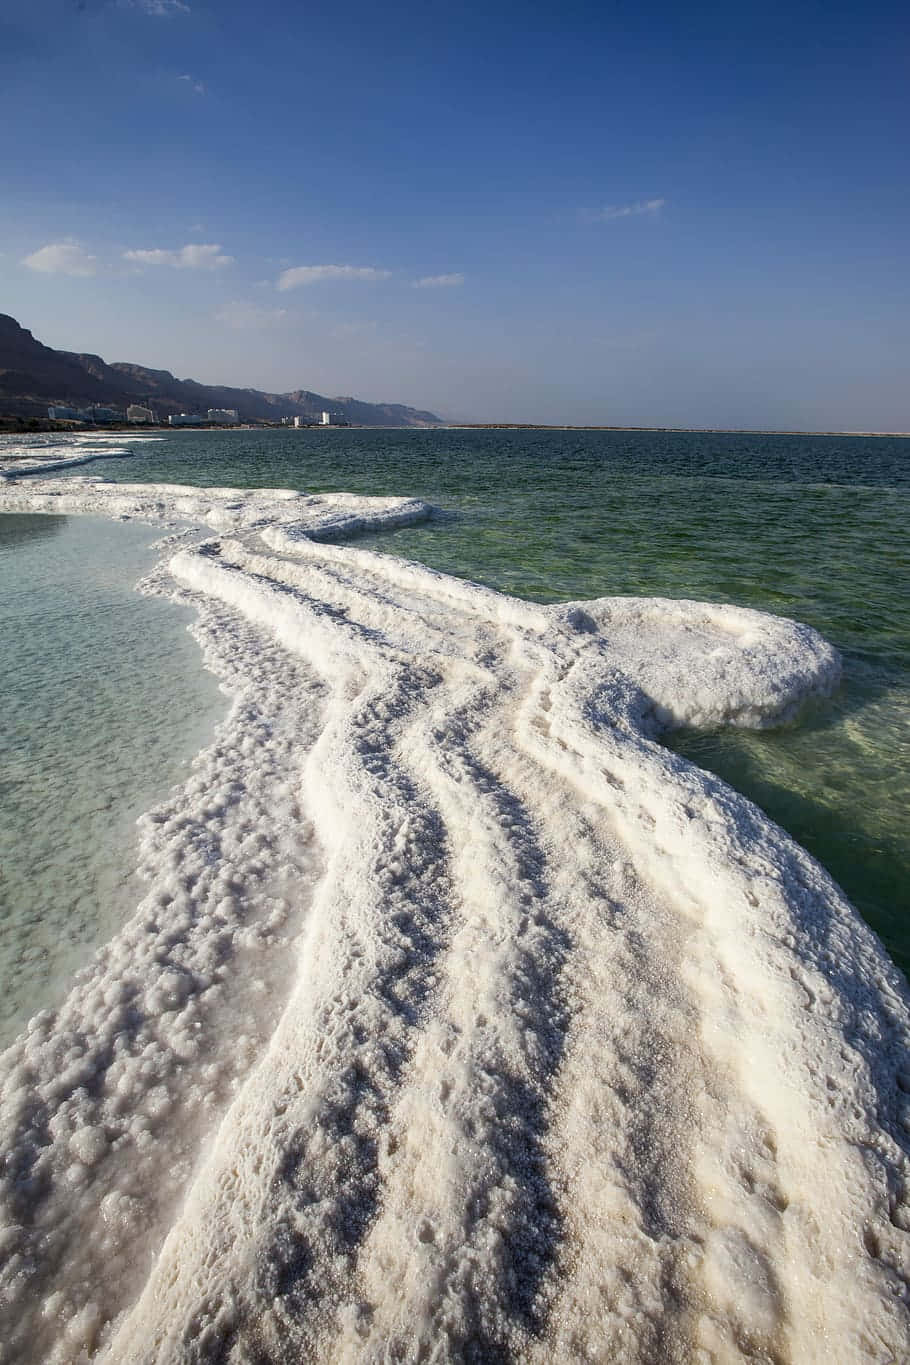 "Breathtaking view of salt formations in the Dead Sea" Wallpaper